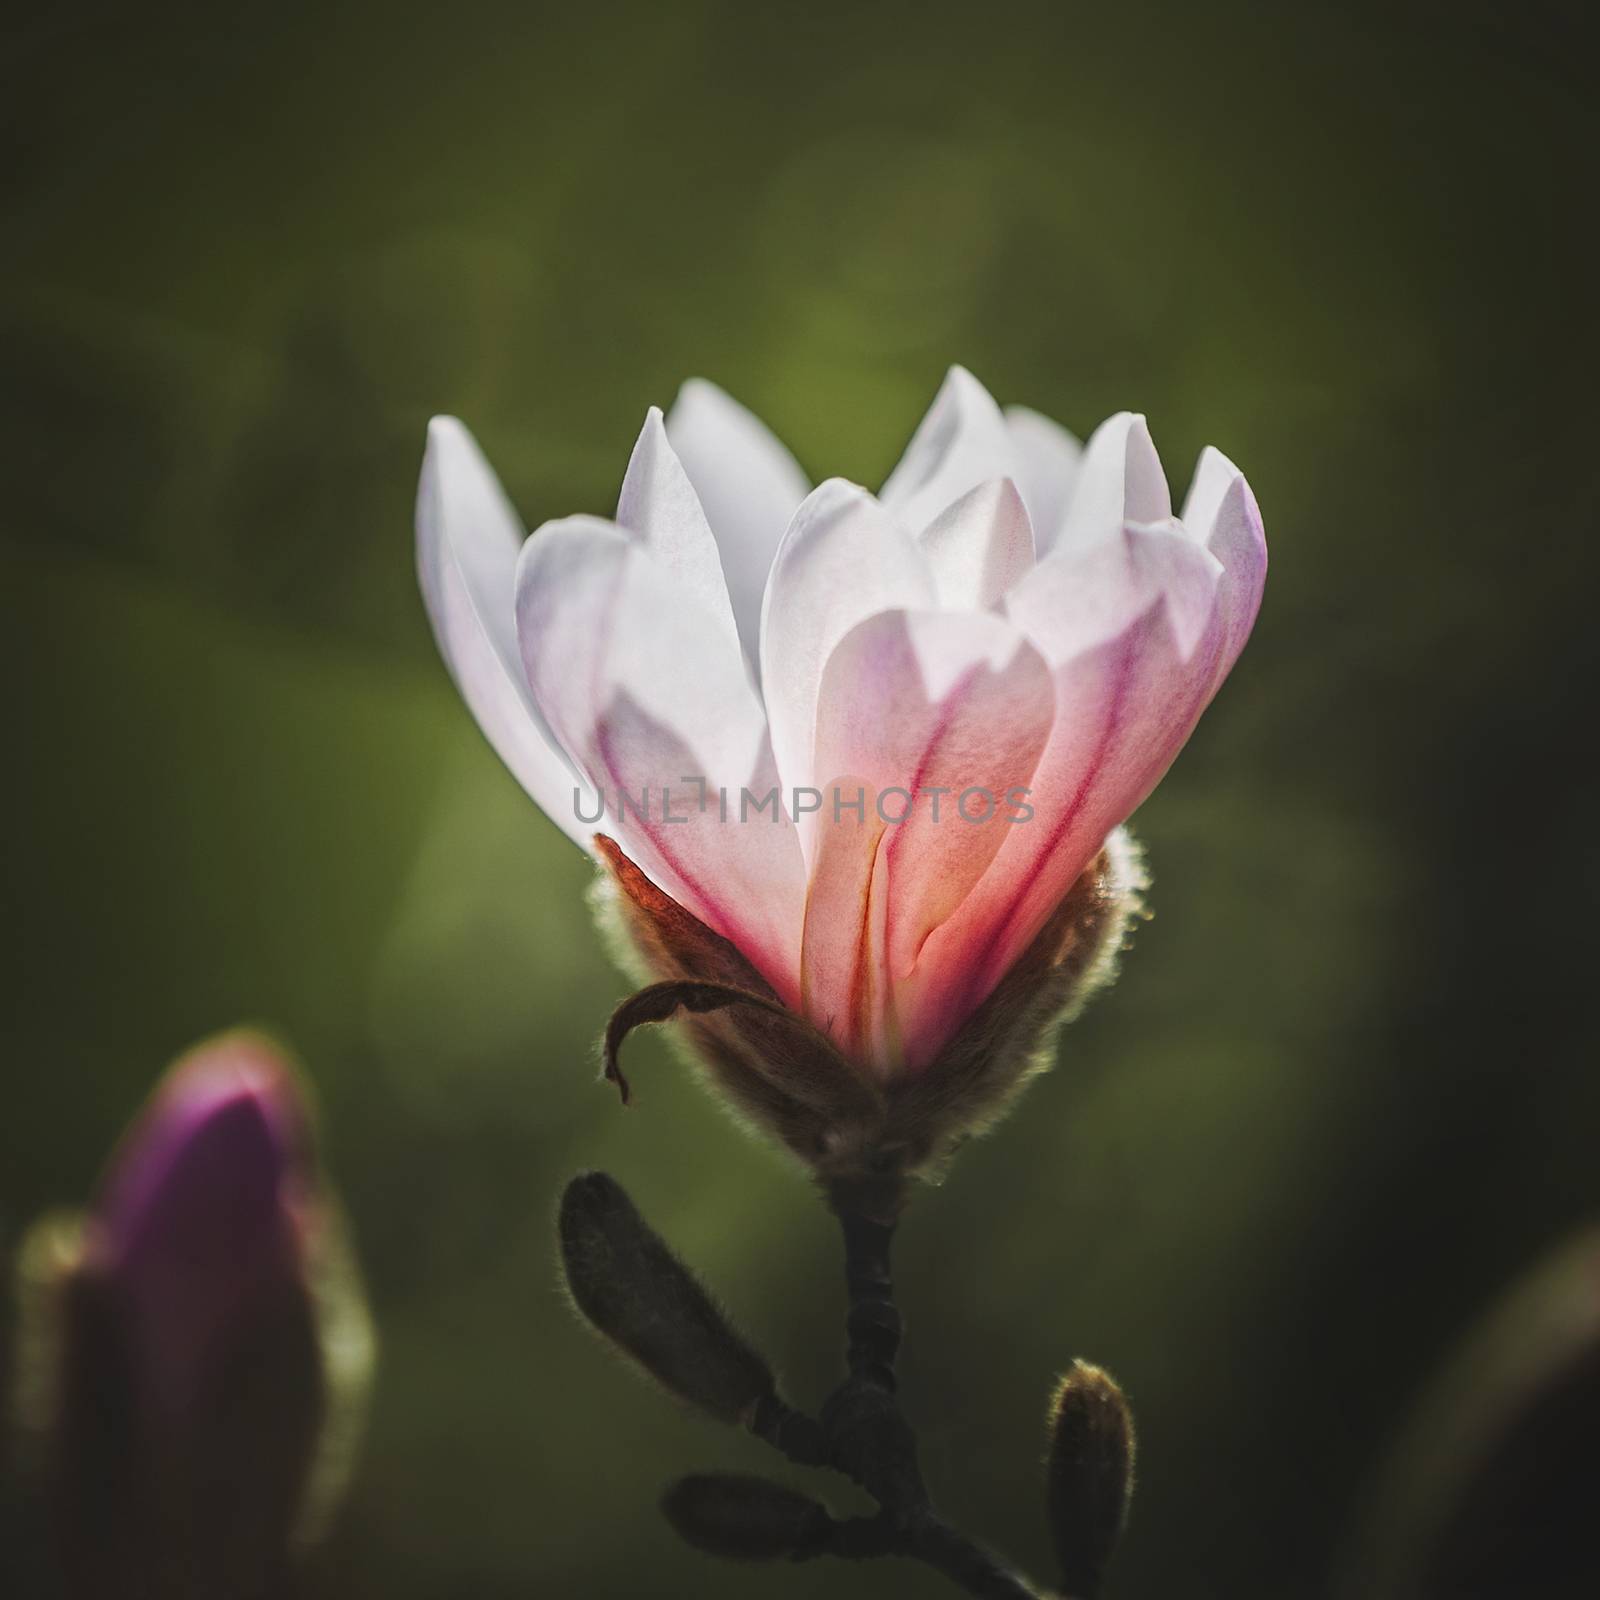 magnolia flower in the park on dark background by zhu_zhu